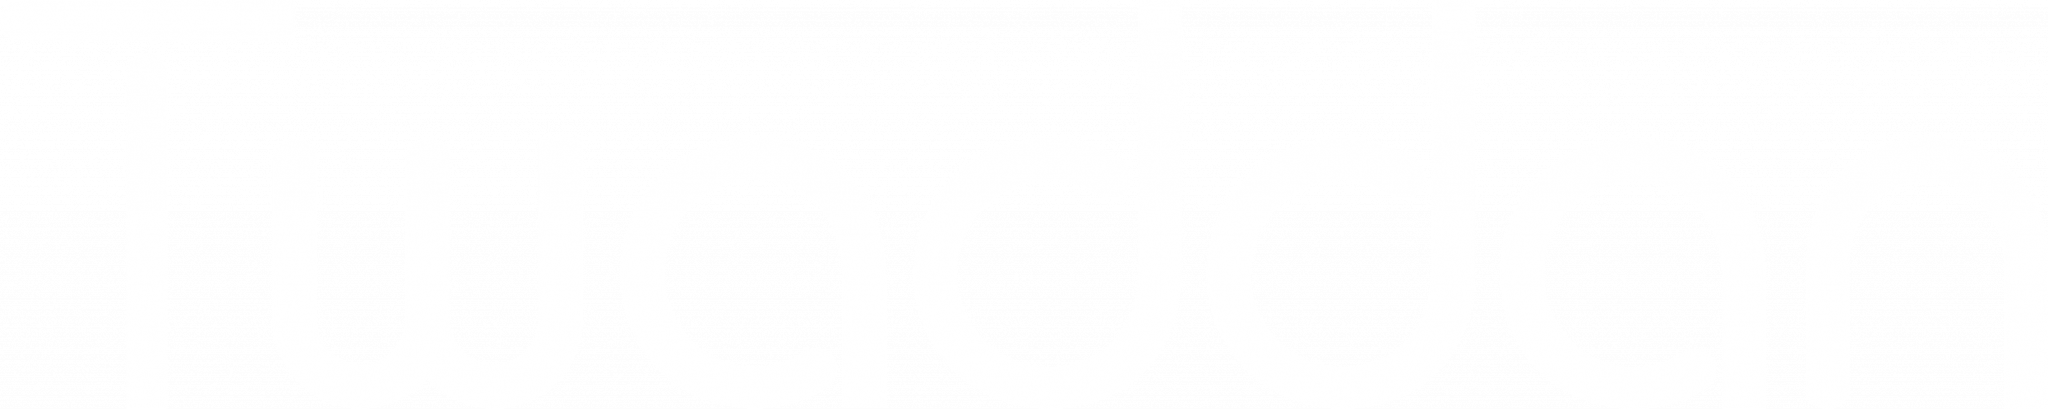 Twaddan-Logo-d021-2048x409